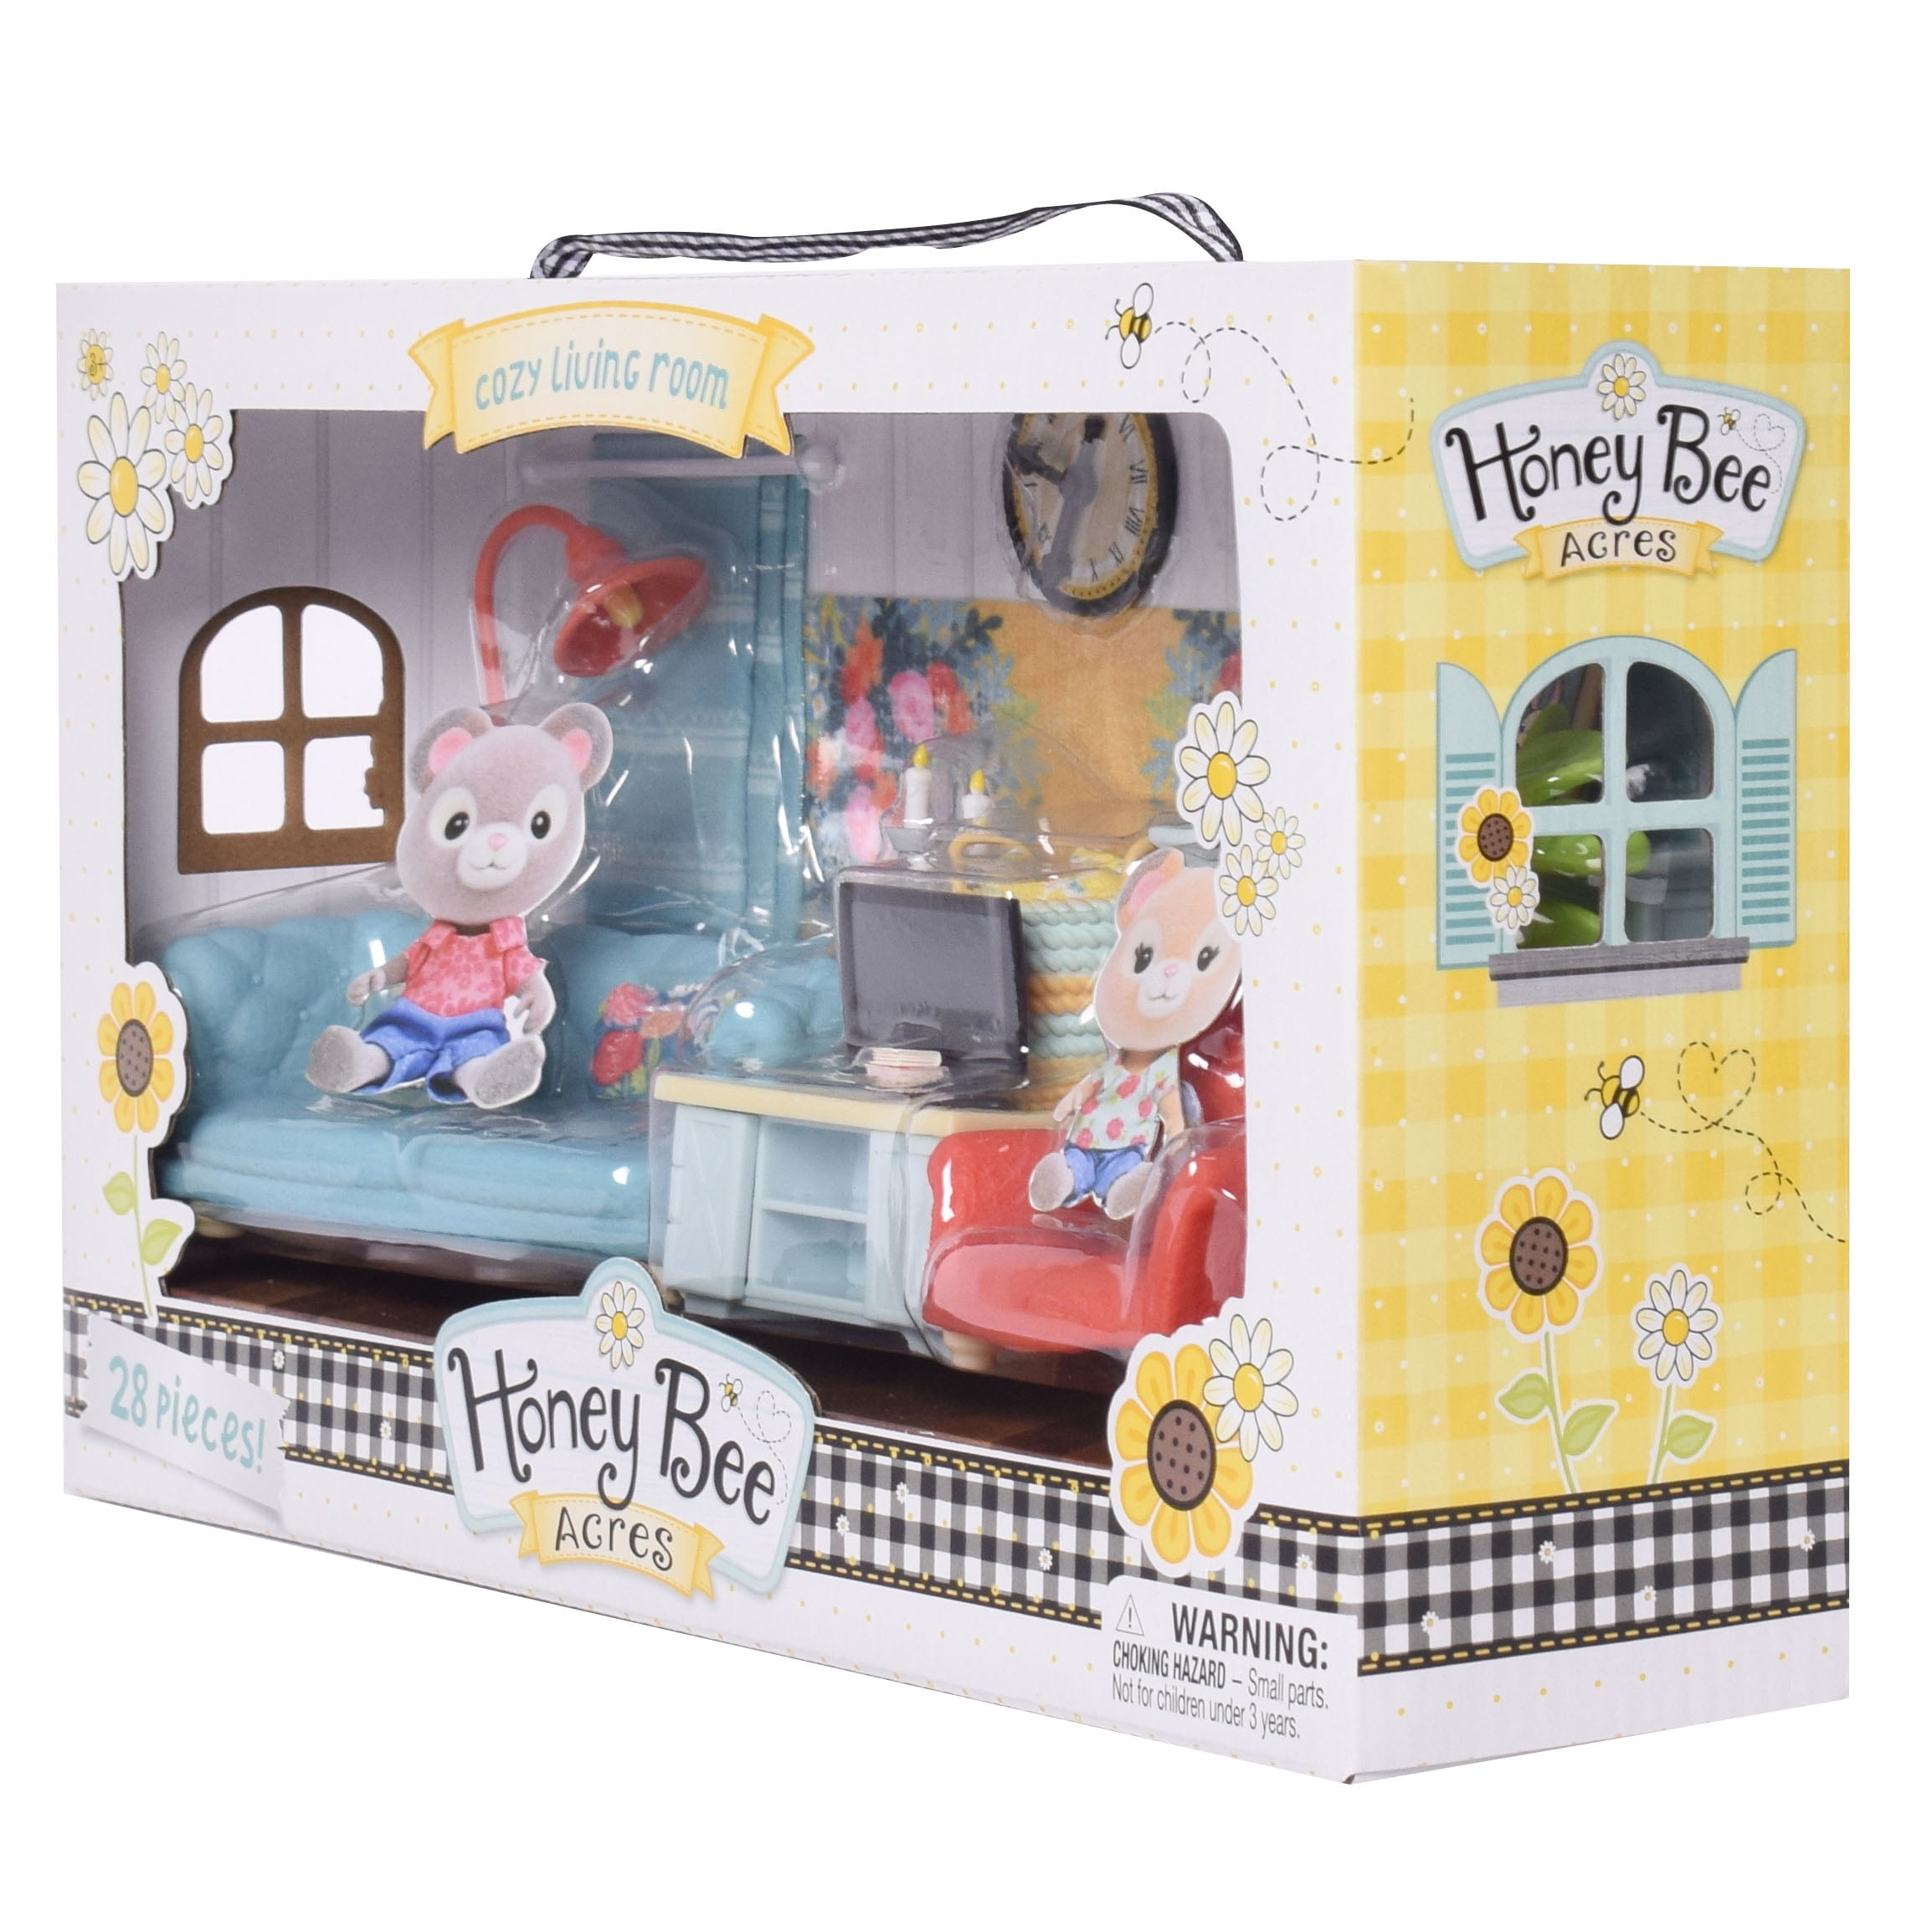 Honey Bee Acres Cozy Living Room 8in Dollhouse Set, 28 Pieces